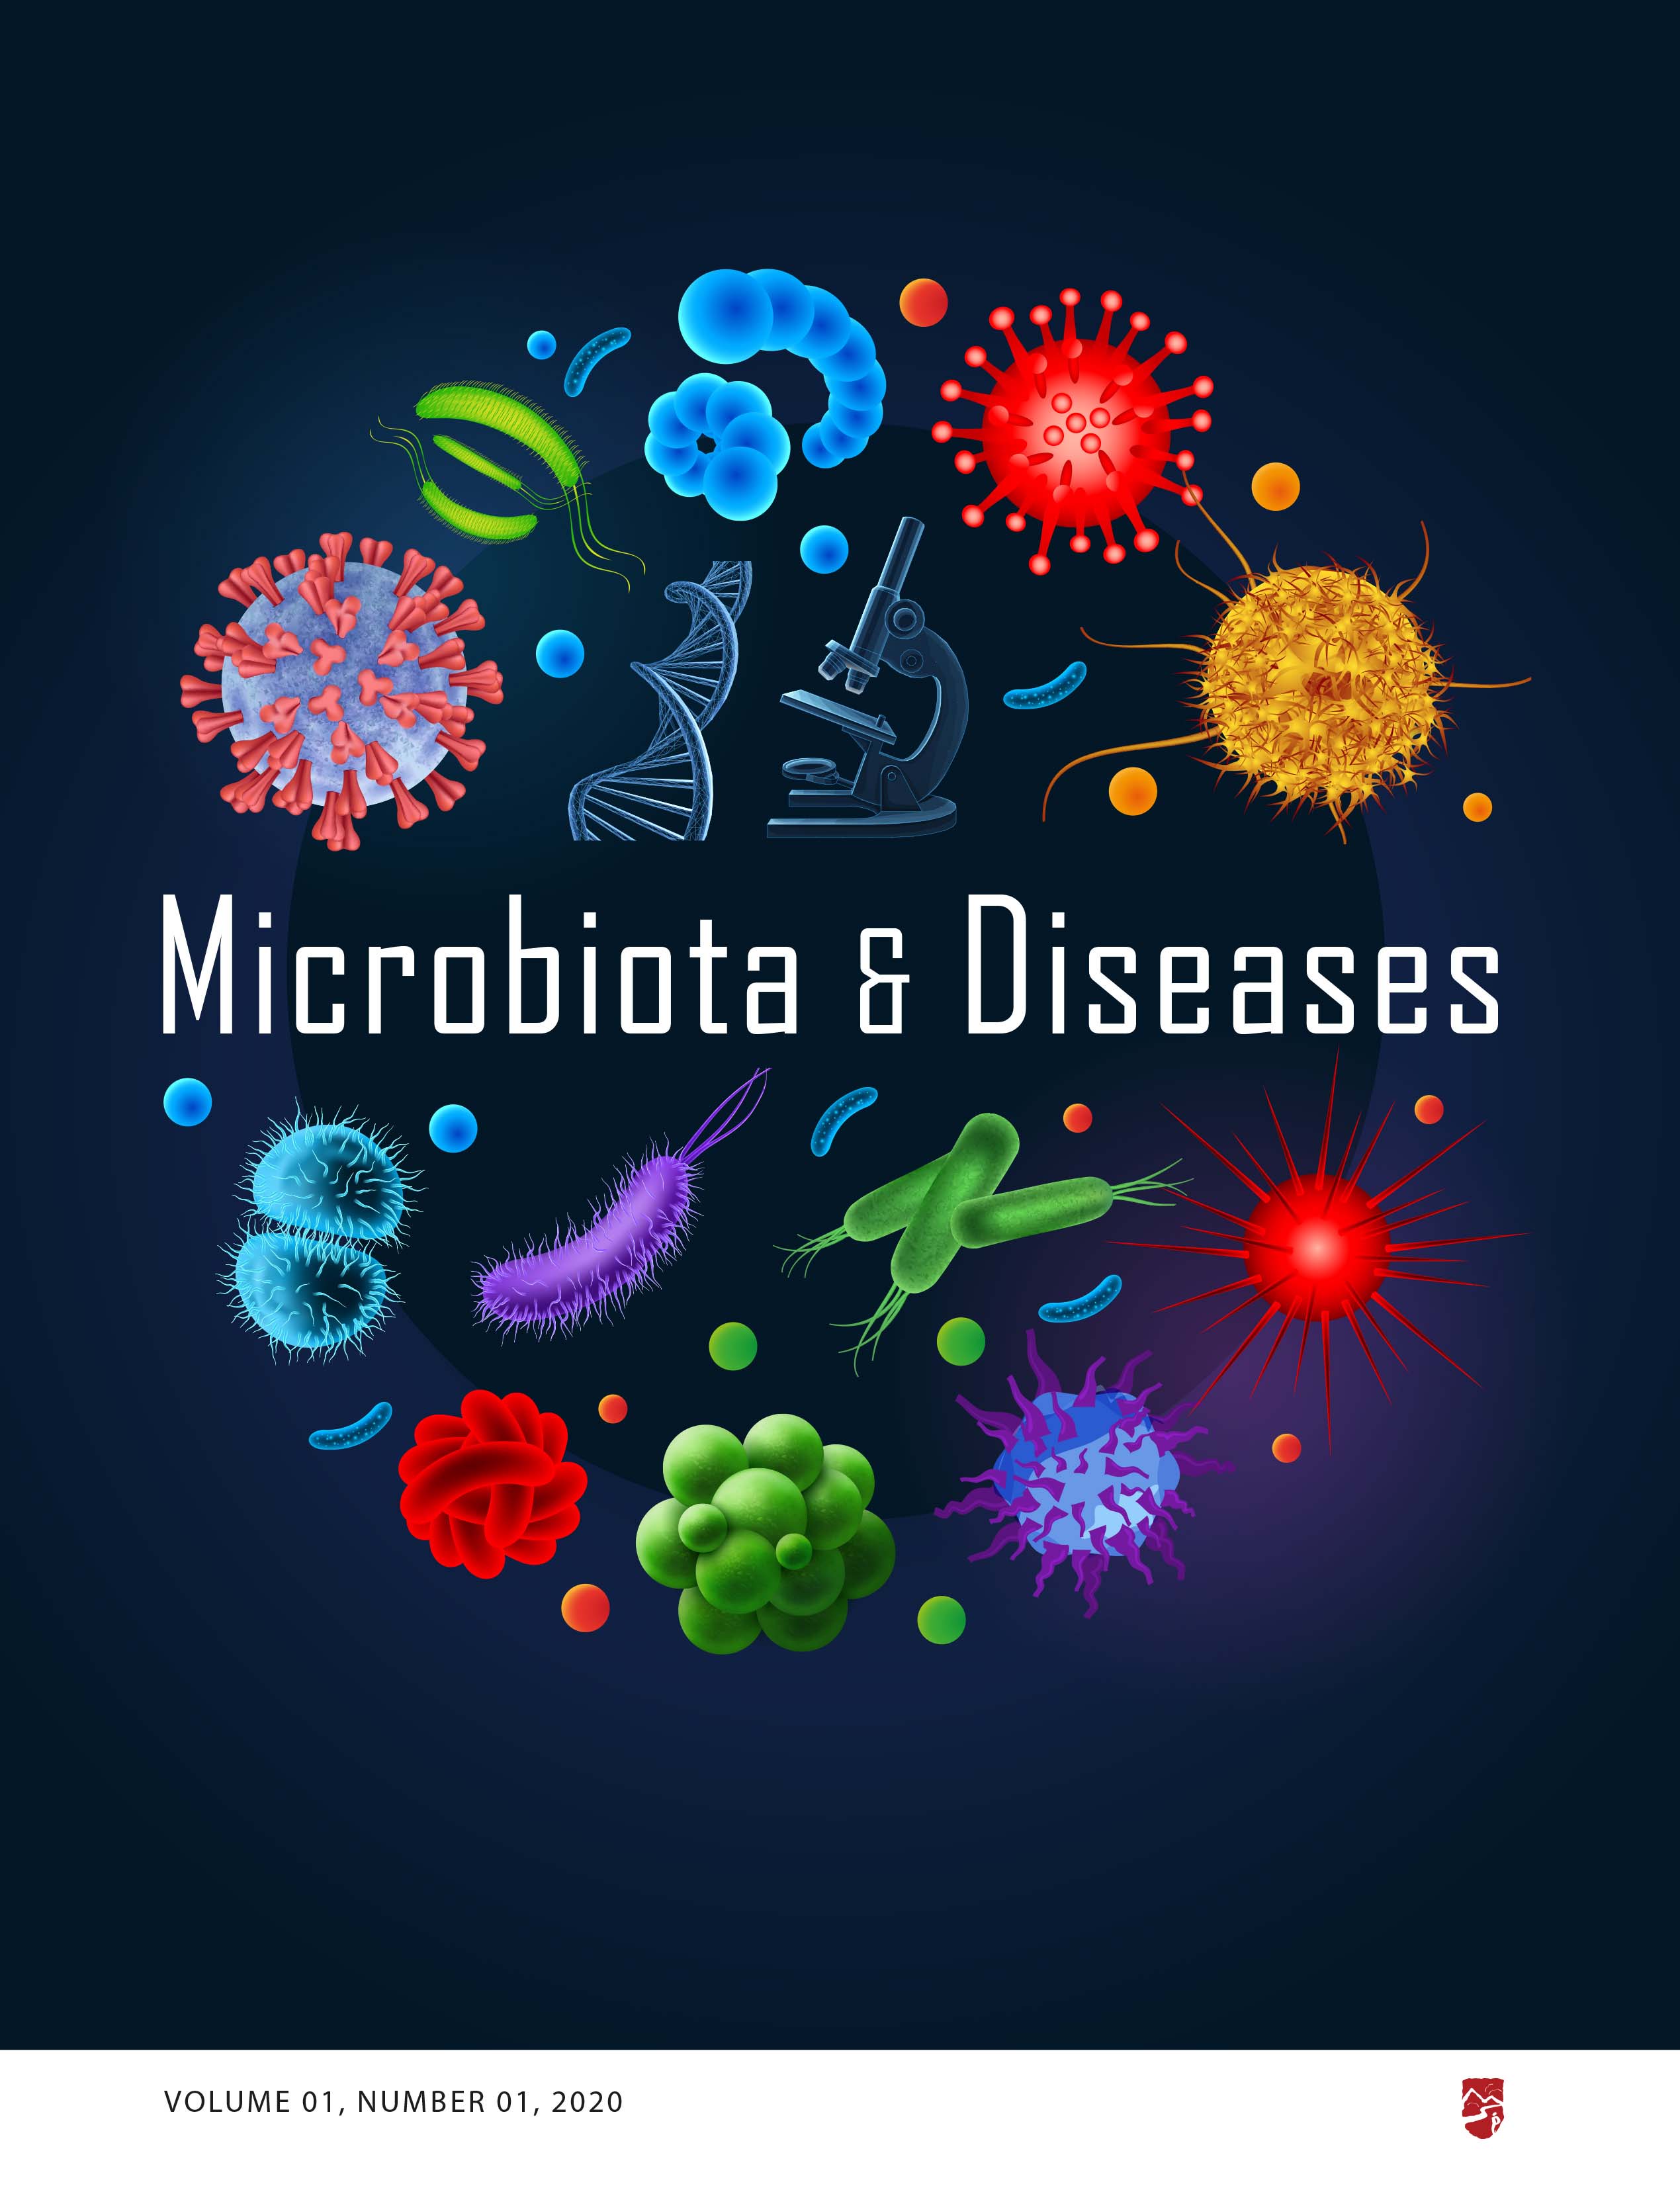 Microbiota & Diseases